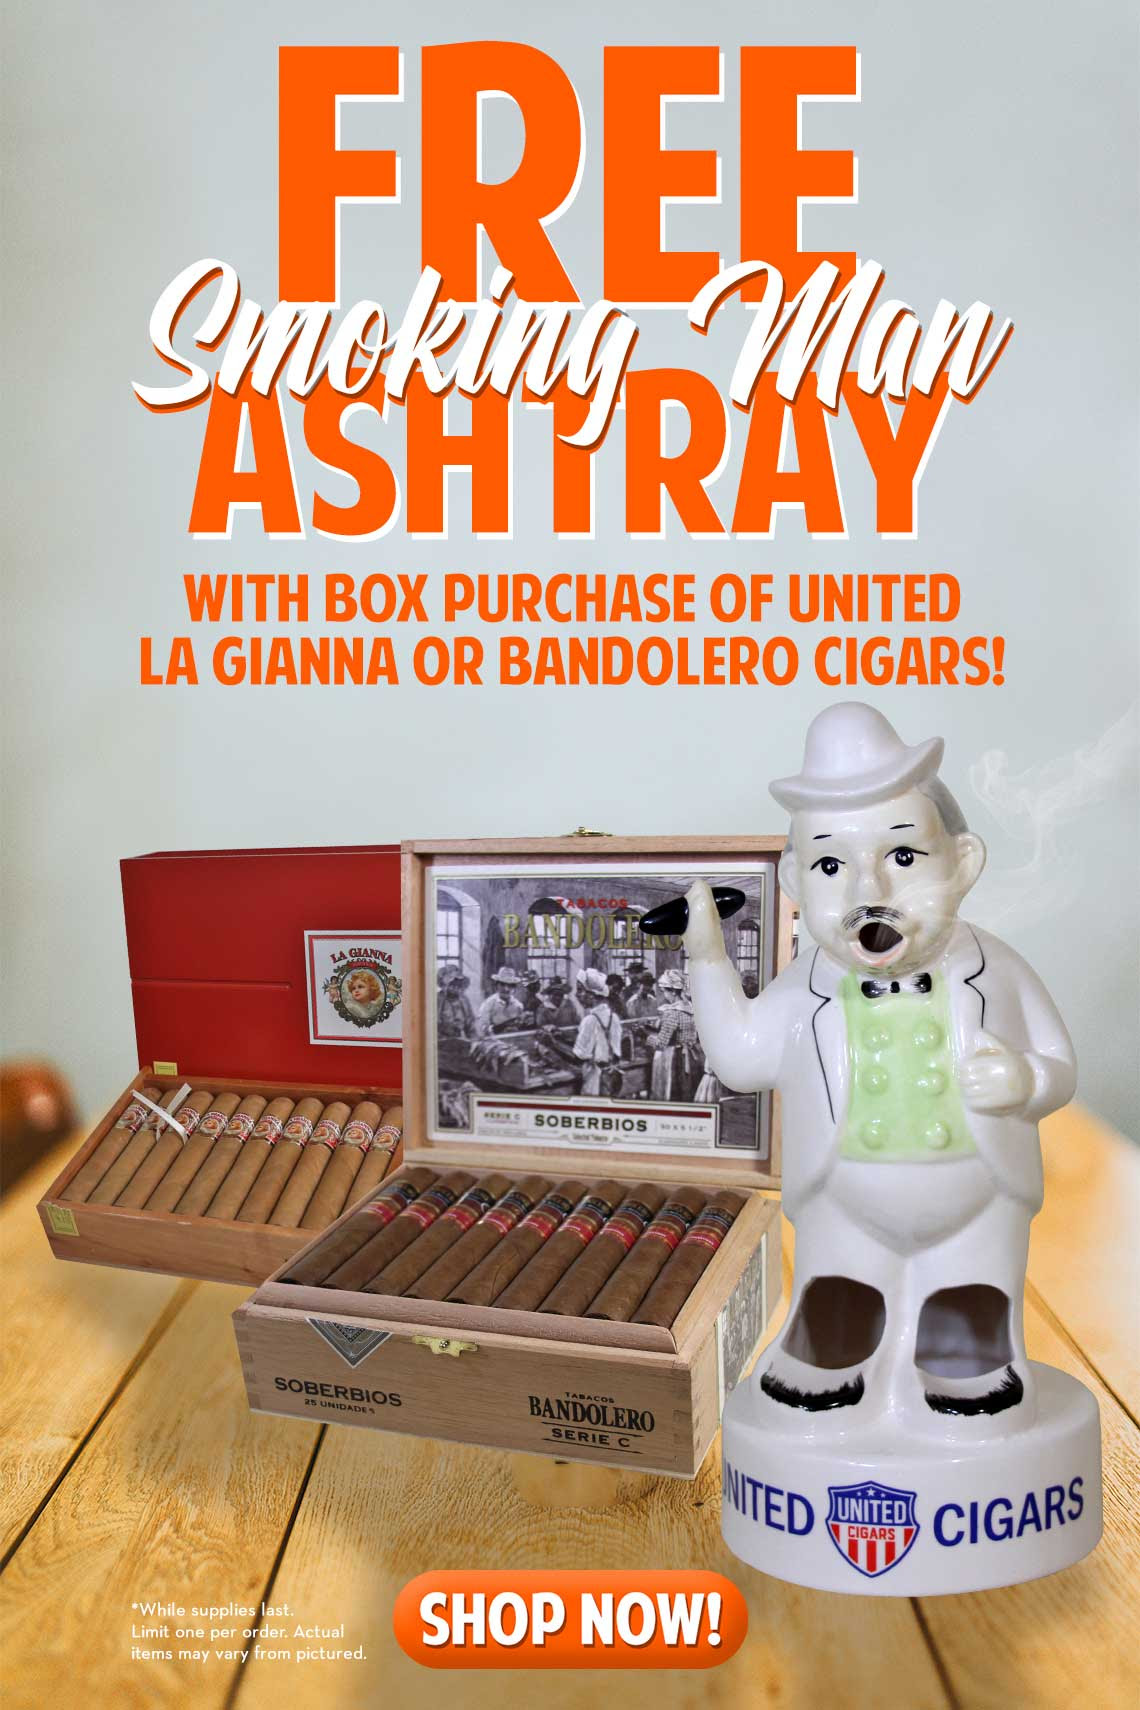 Free Smoking Man Ashtray